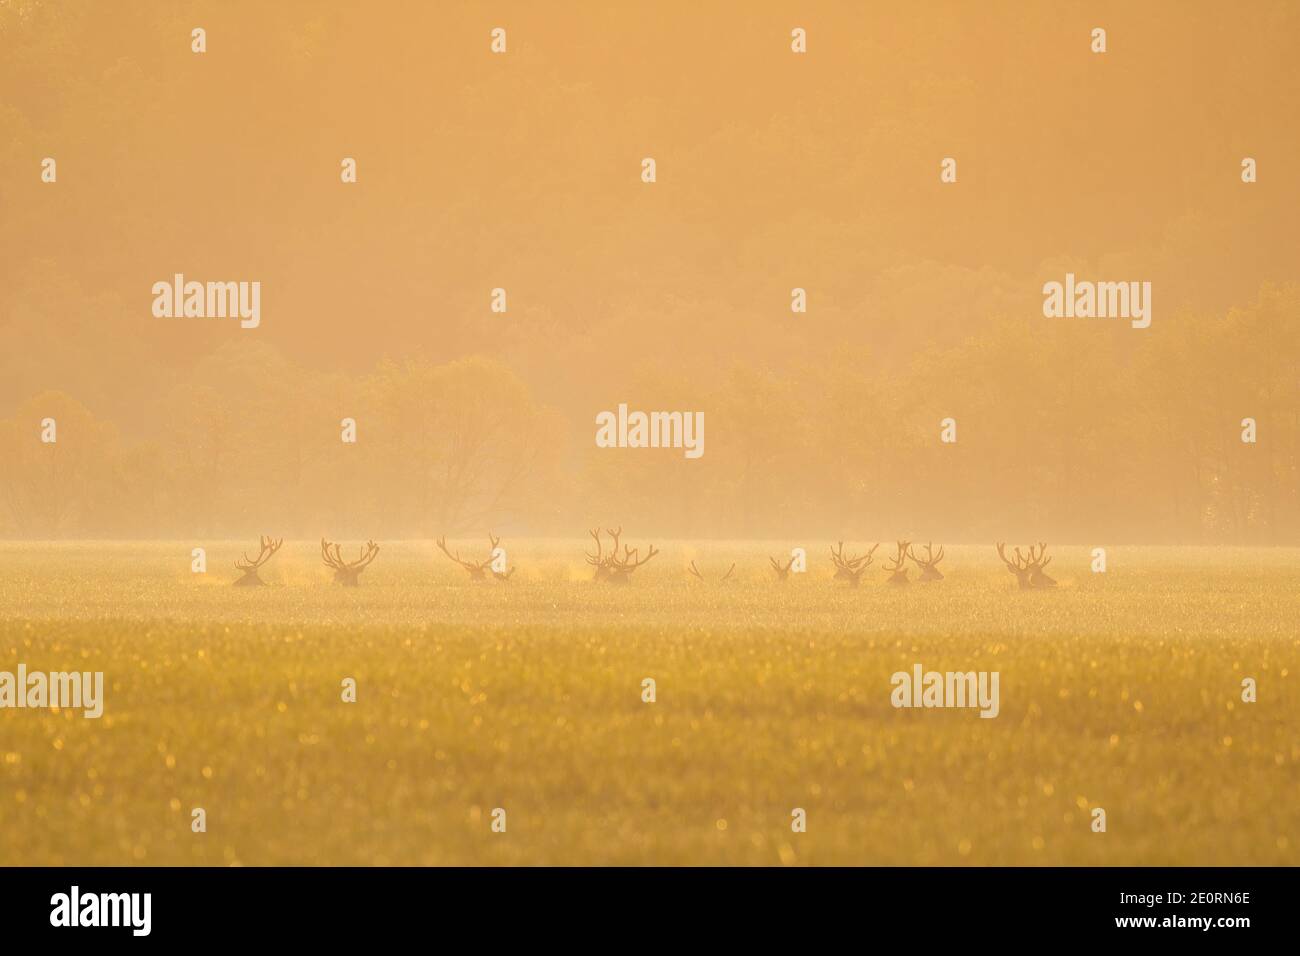 Red deer herd standing on field in orange morning mist Stock Photo